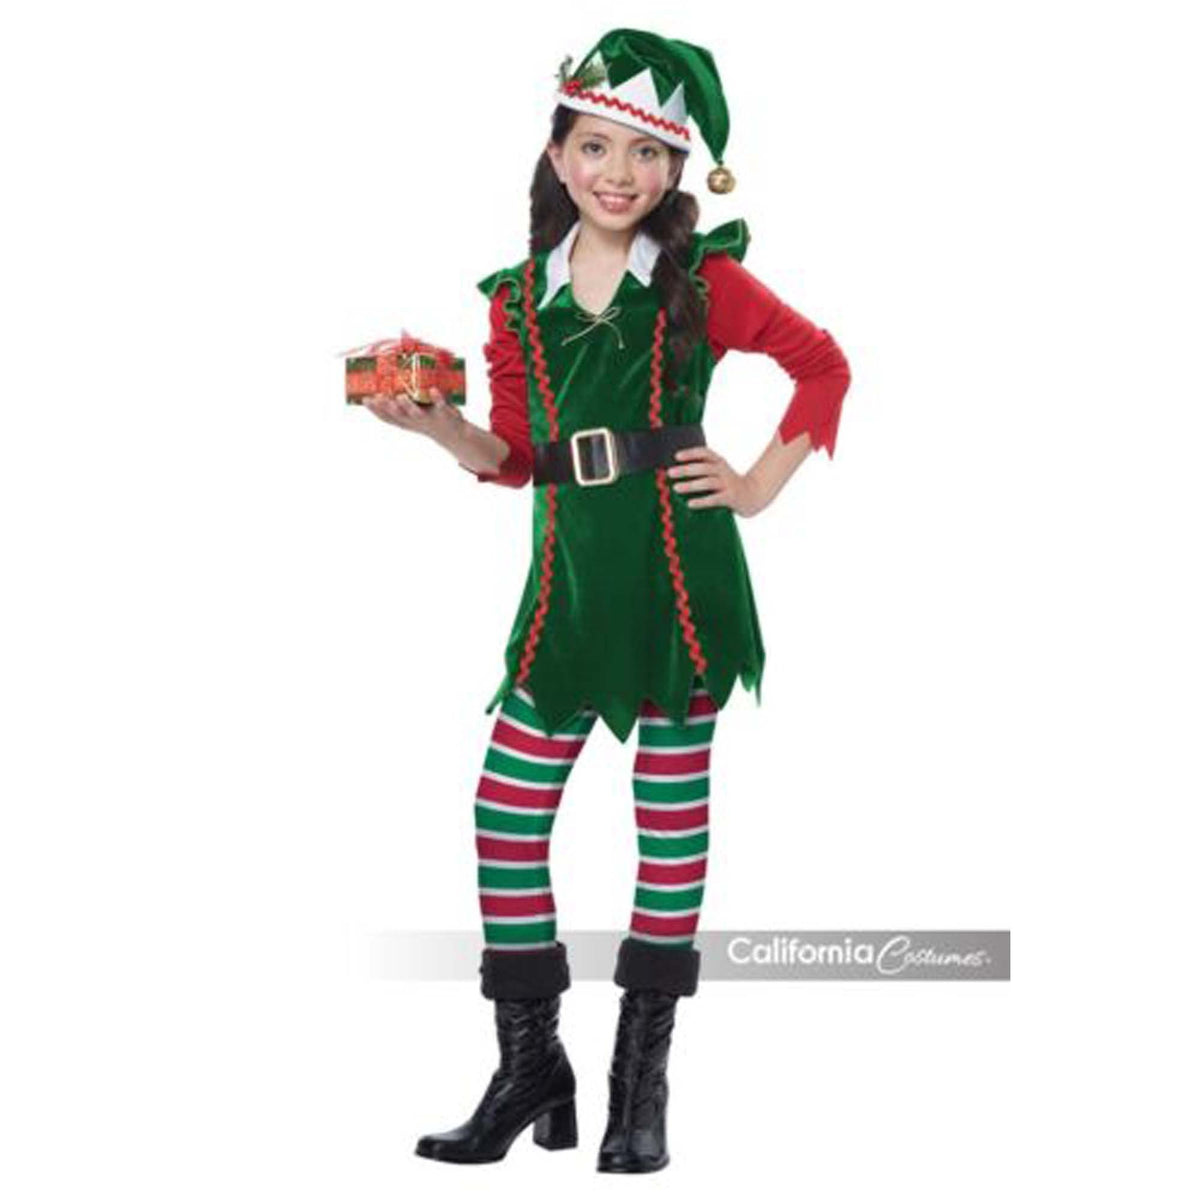 CALIFORNIA COSTUMES Christmas Festive Elf Costume for Kids